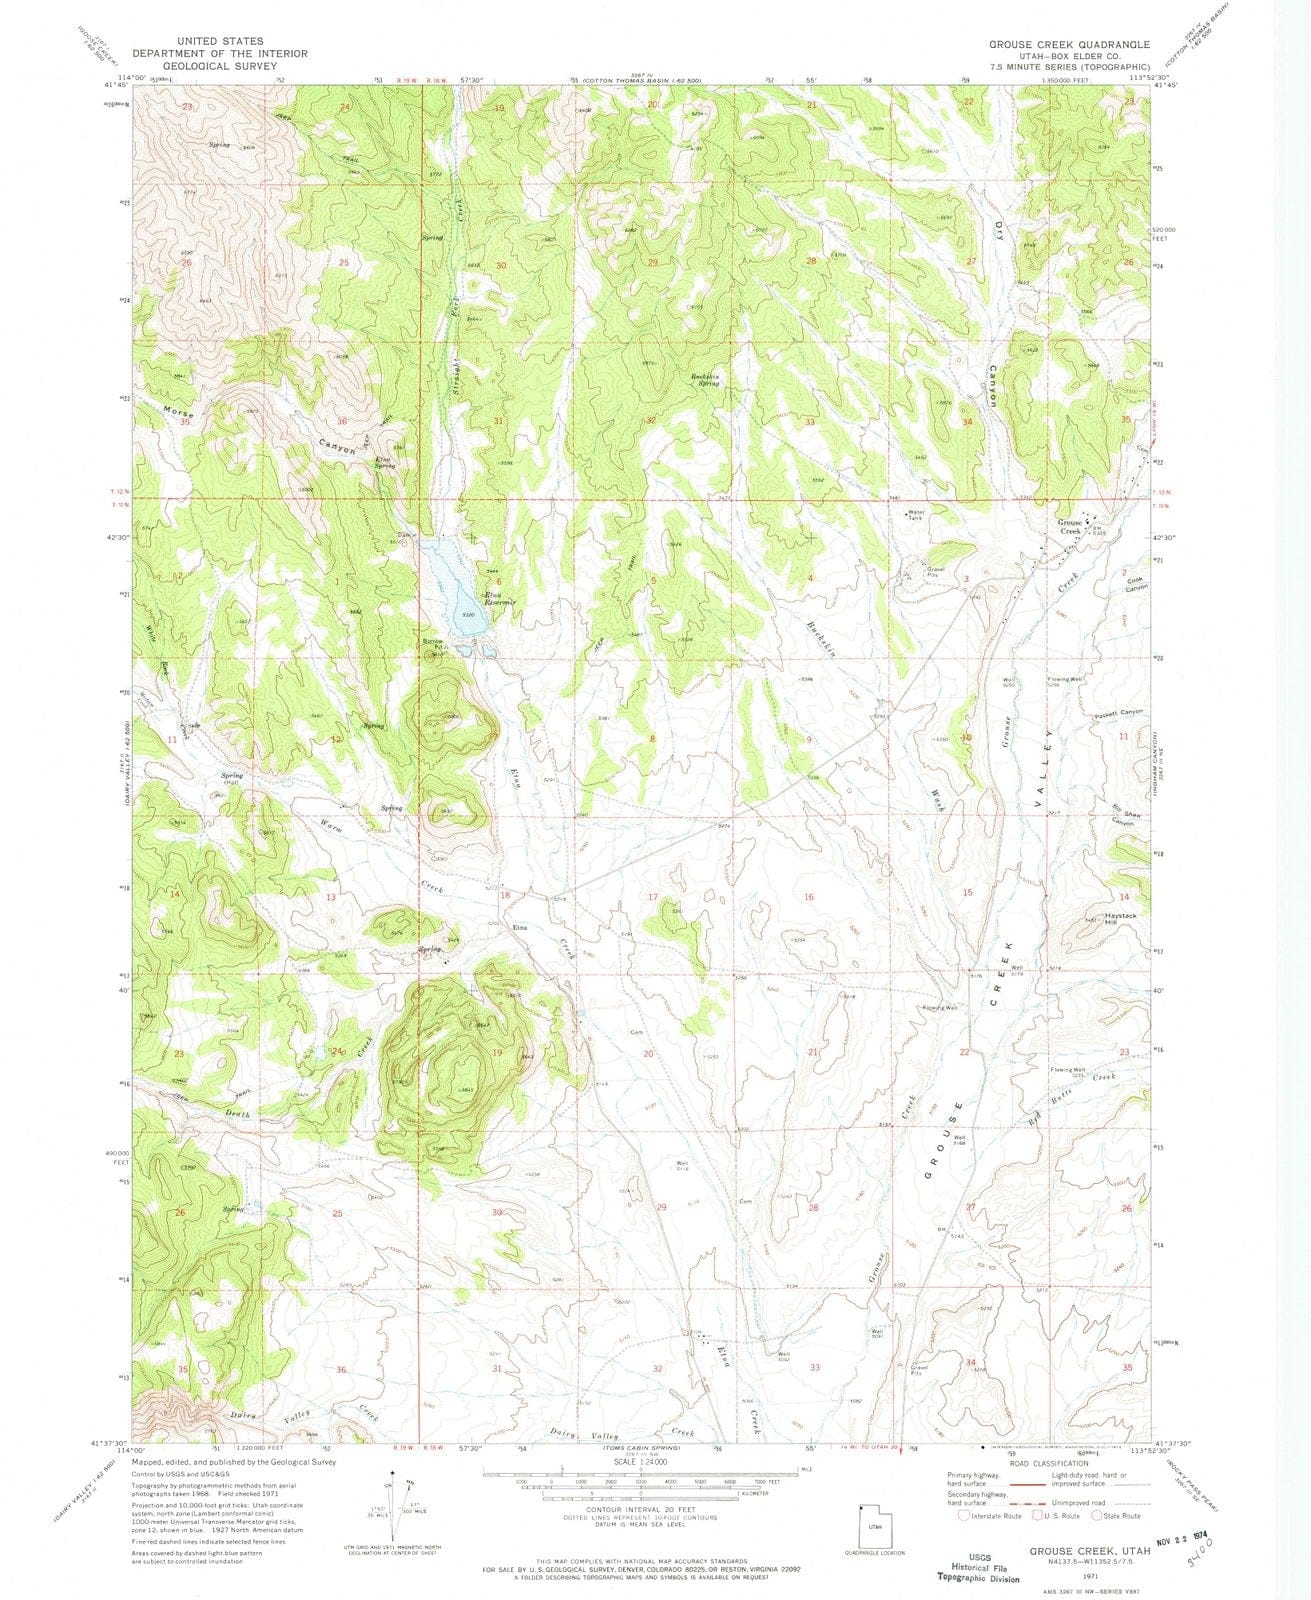 1971 Grouse Creek, UT - Utah - USGS Topographic Map